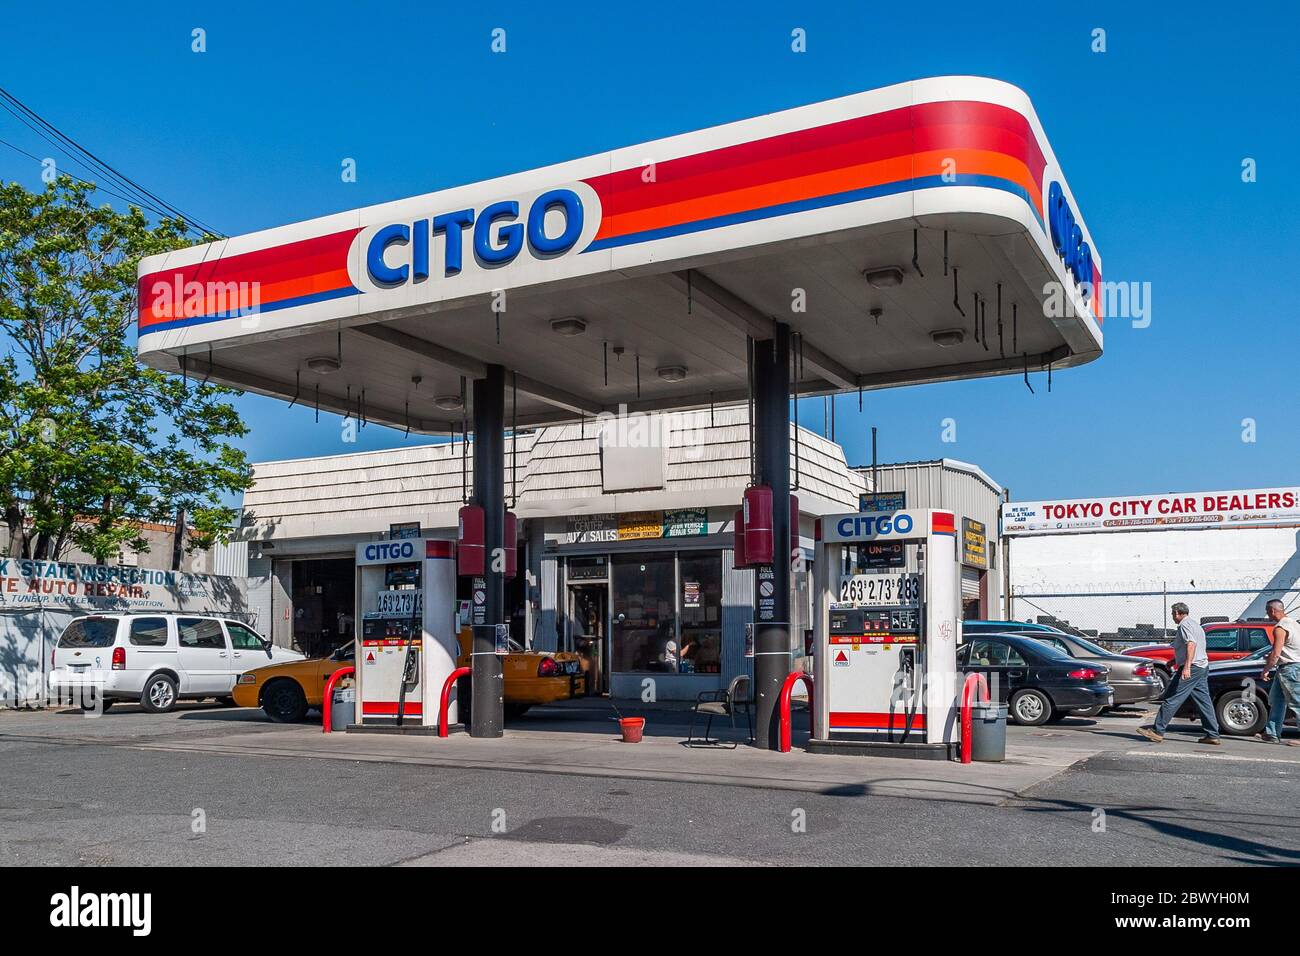 Citgo gas station in New York City Stock Photo